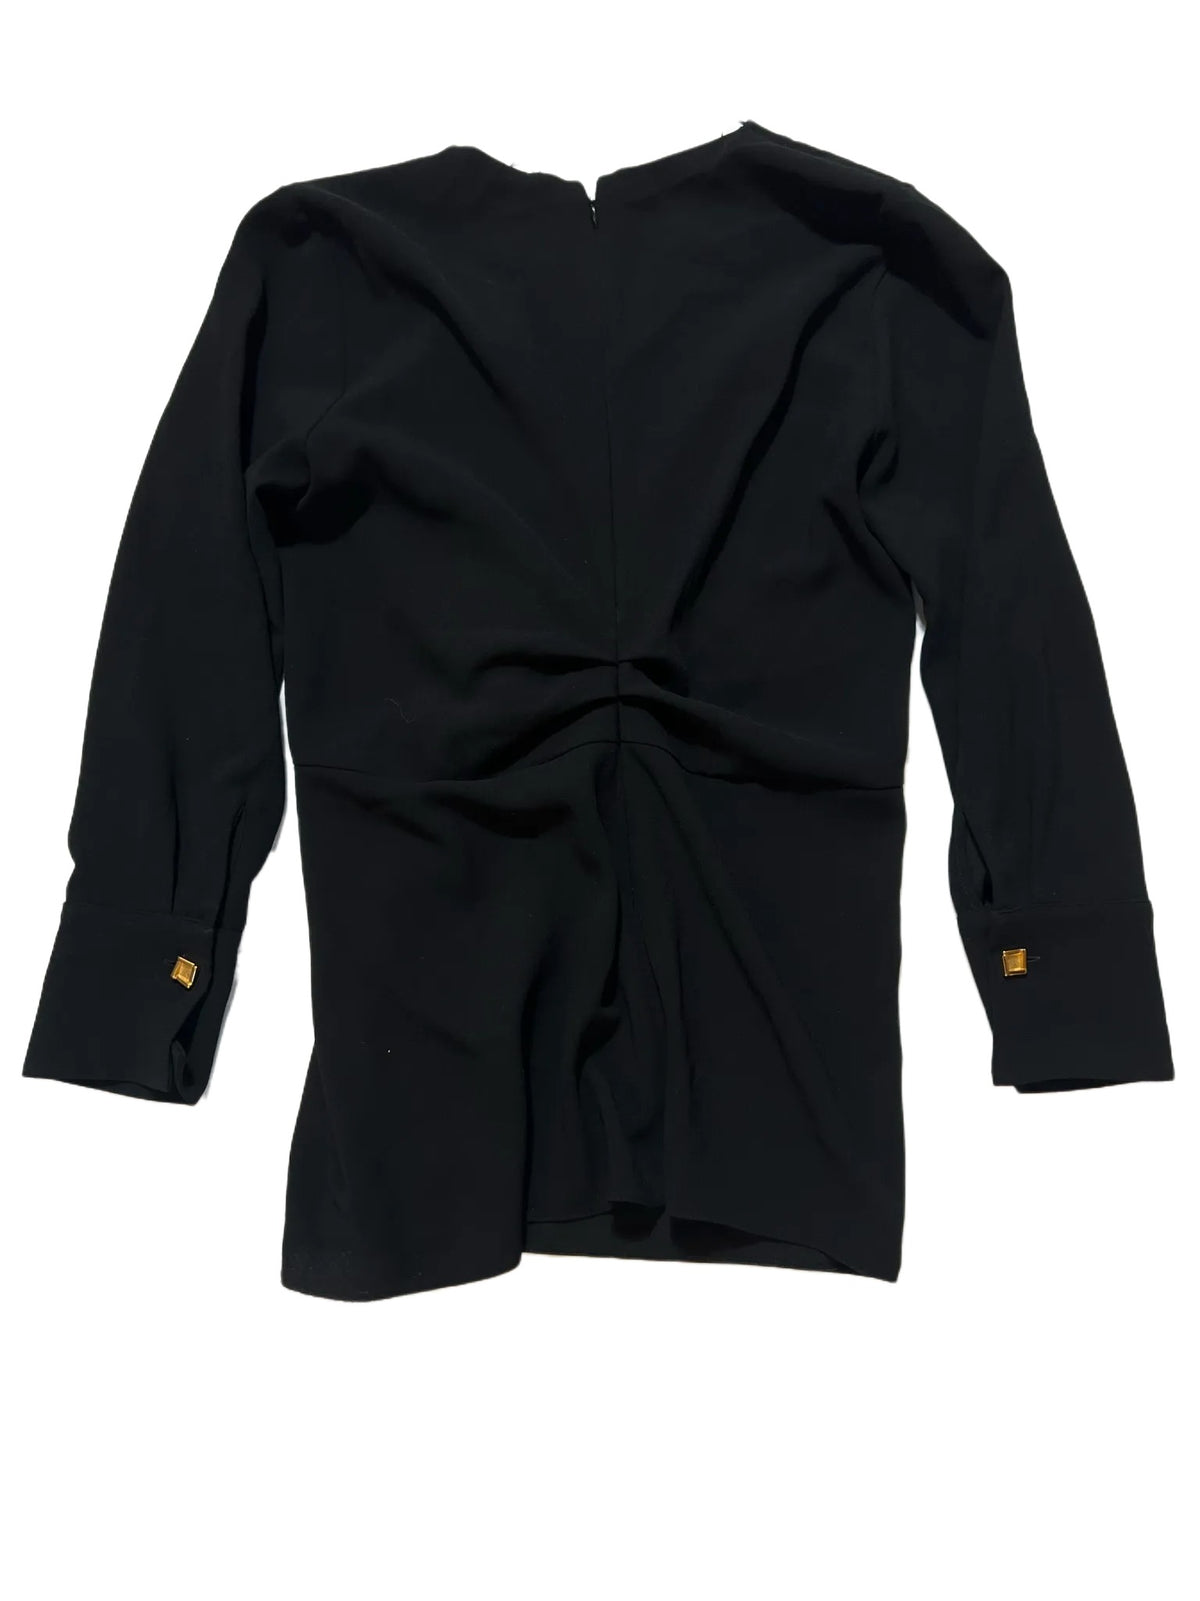 Zara- Black Long Sleeve Mini Dress New With Tags!